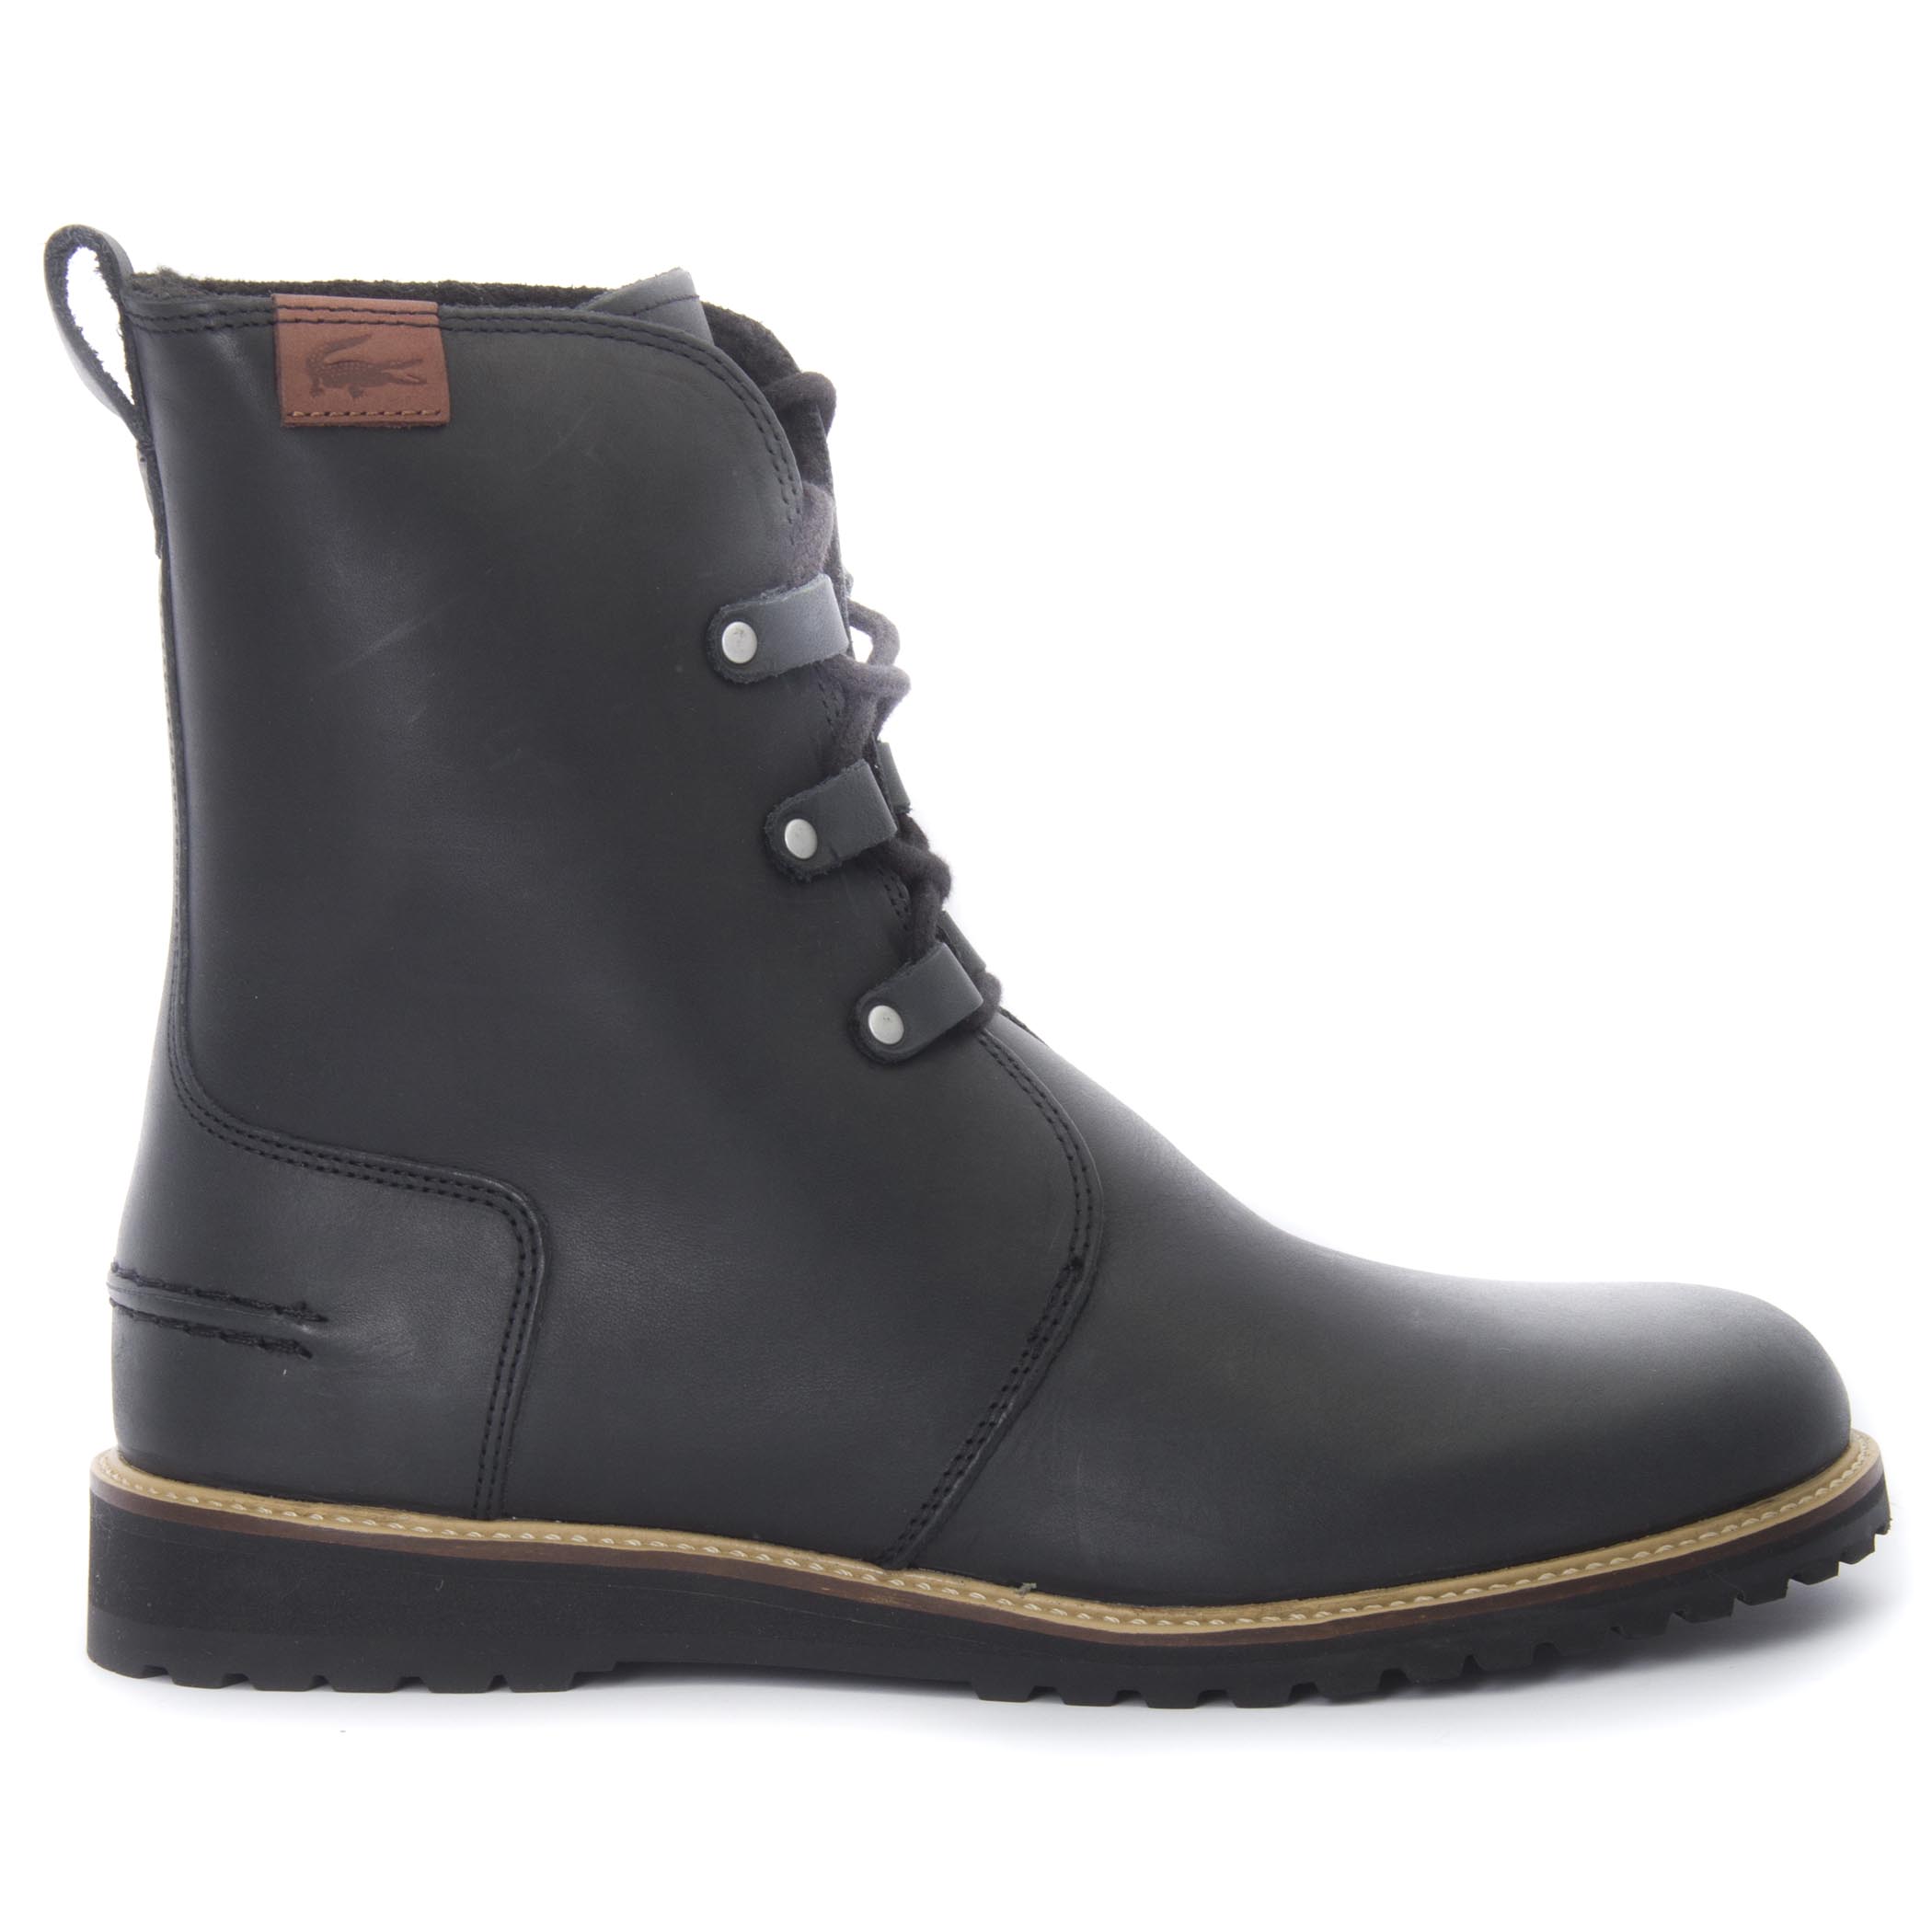 Lacoste Women's Baylen Leather Winter Boots